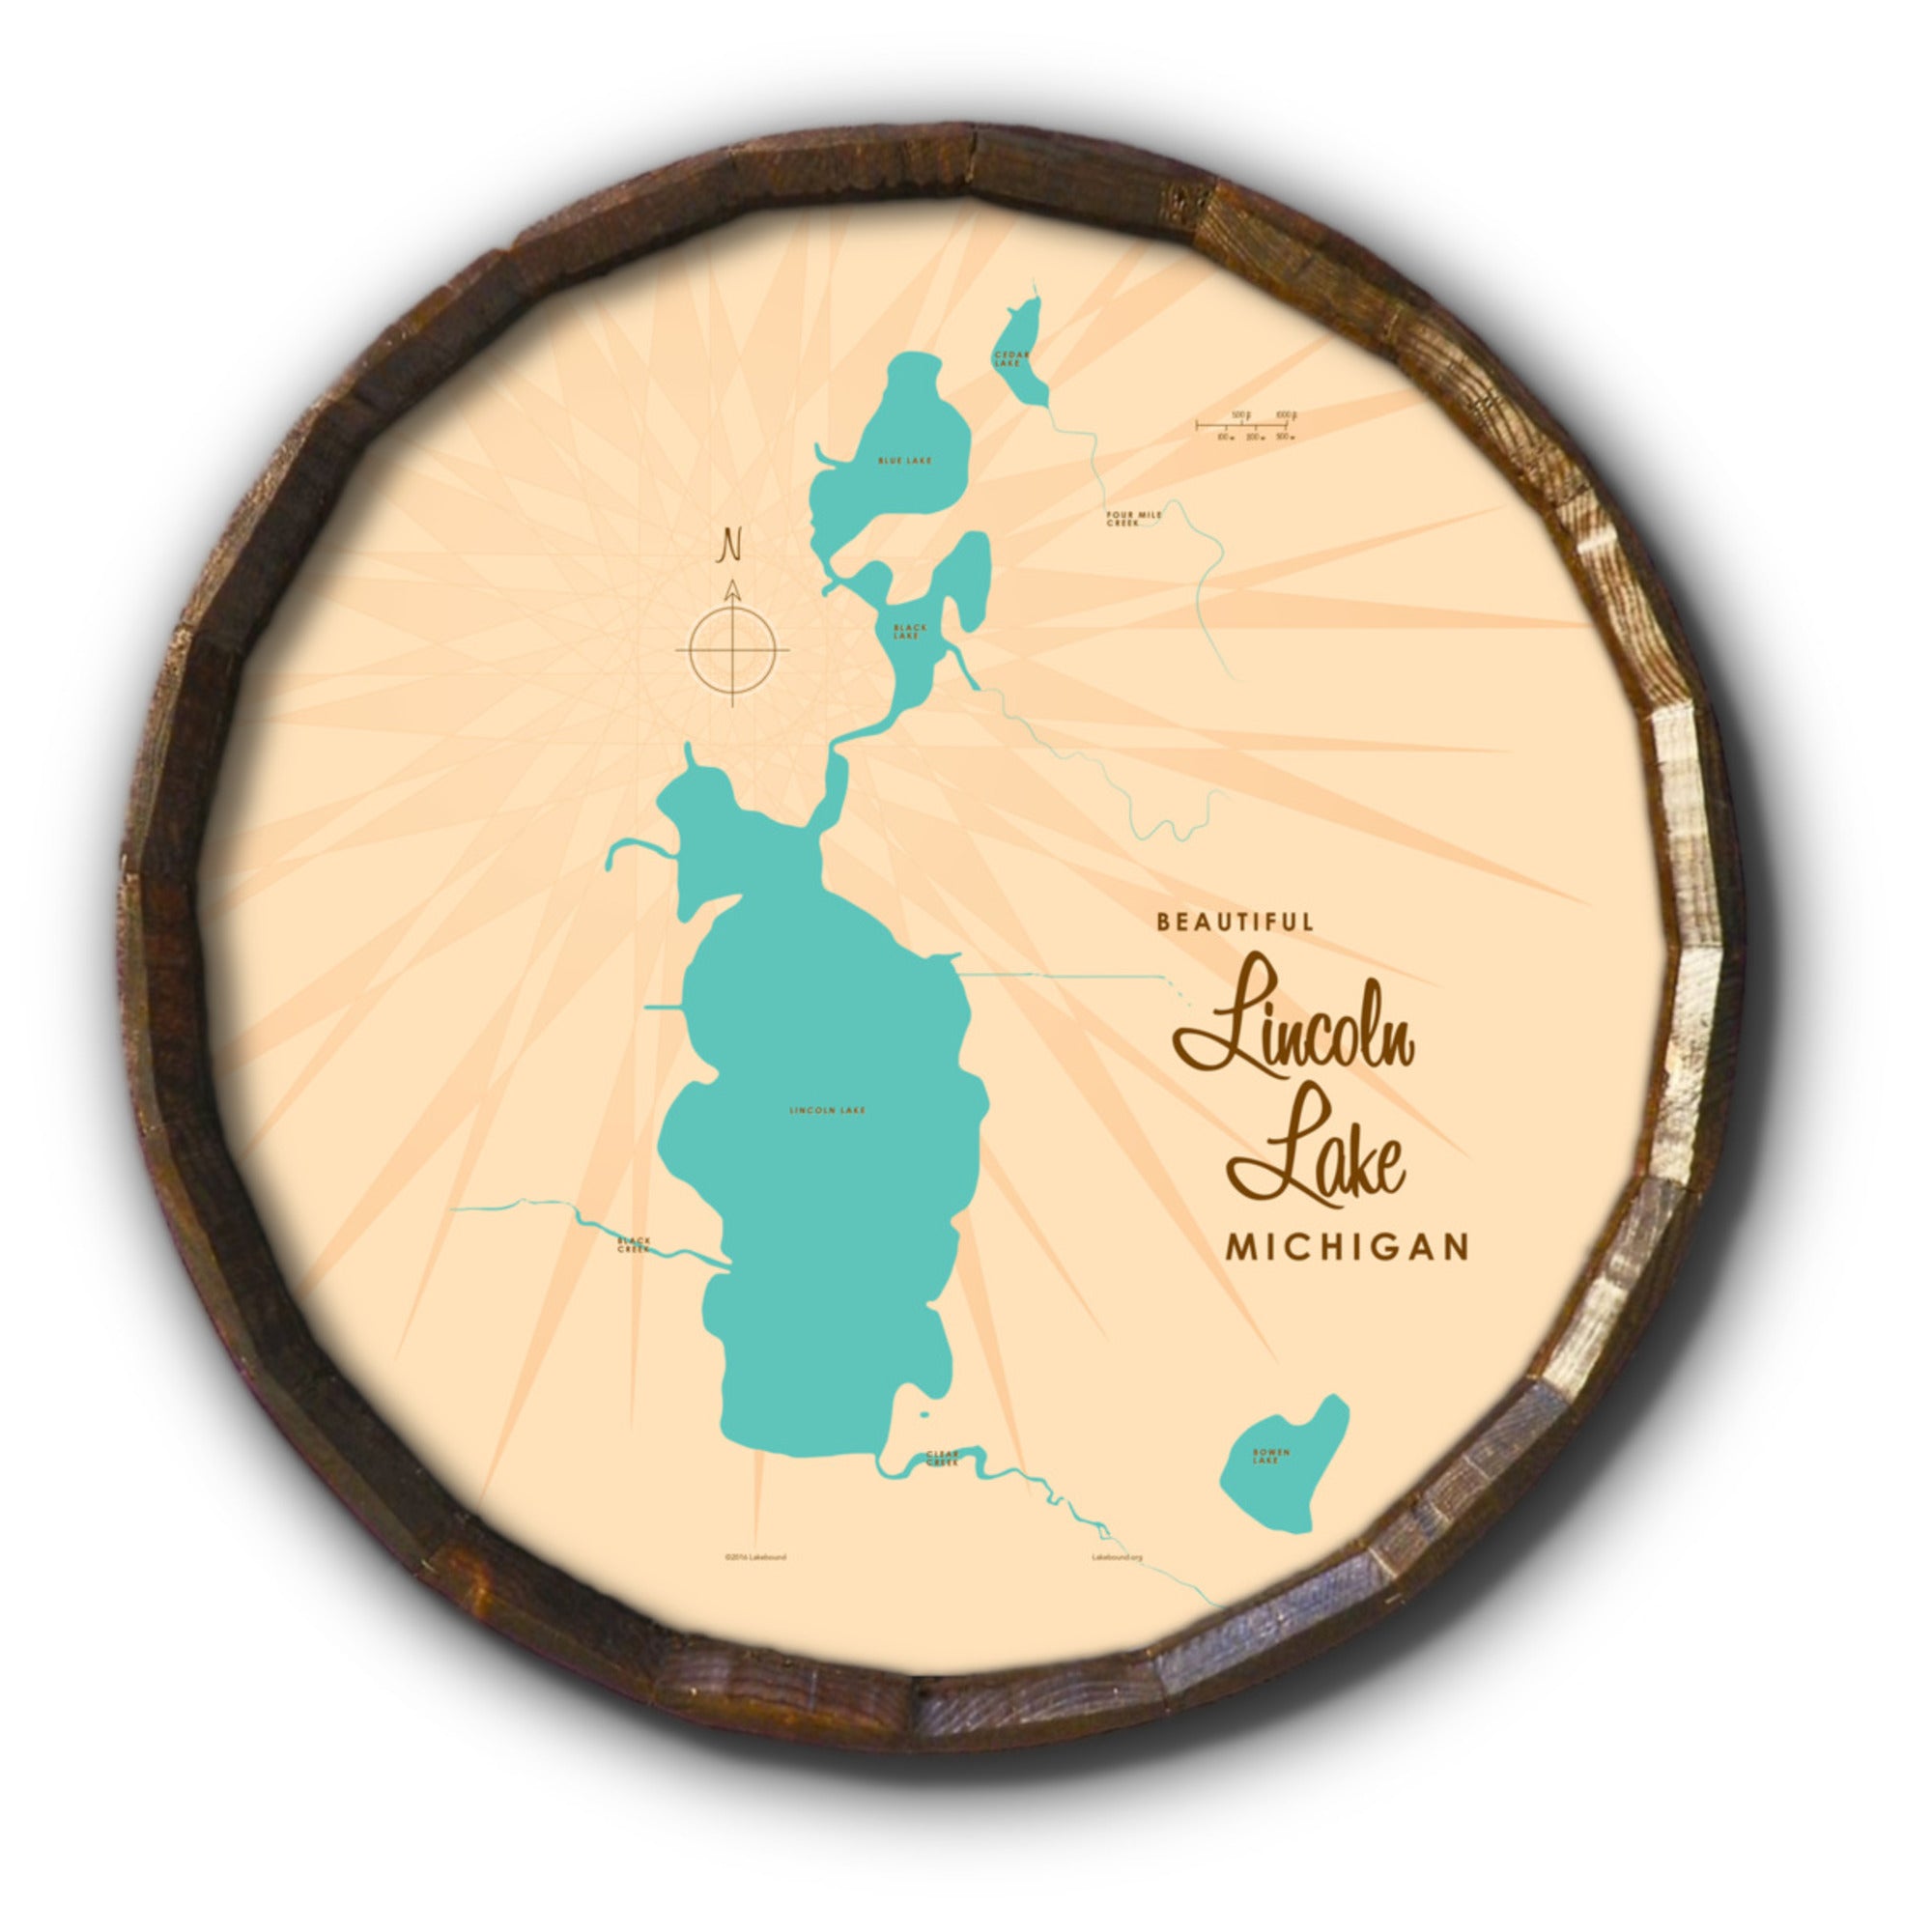 Lincoln Lake Michigan, Barrel End Map Art